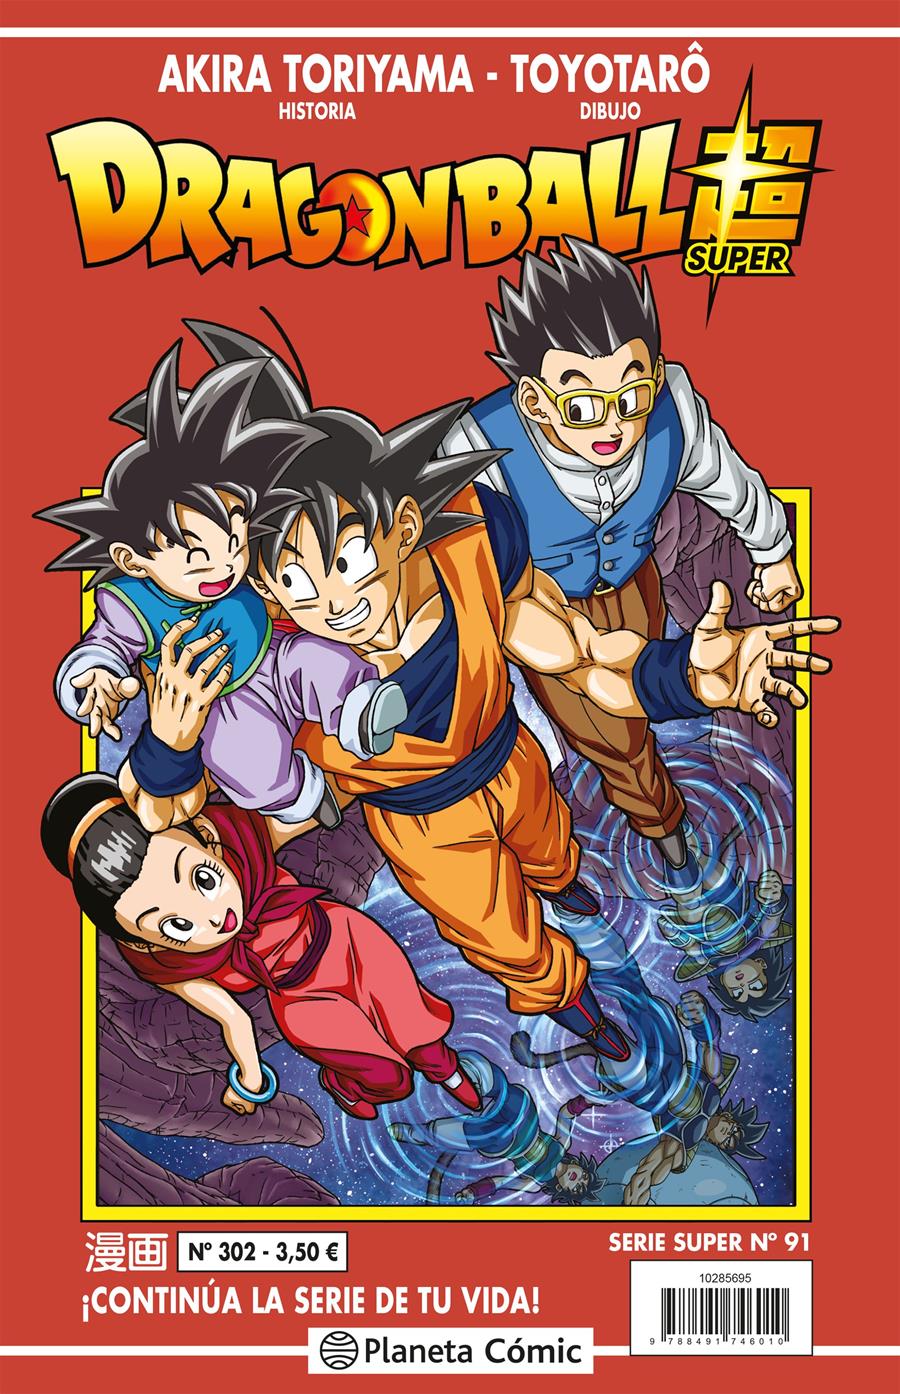 Dragon Ball Serie Roja nº 302 | N0223-PLA23 | Akira Toriyama | Terra de Còmic - Tu tienda de cómics online especializada en cómics, manga y merchandising